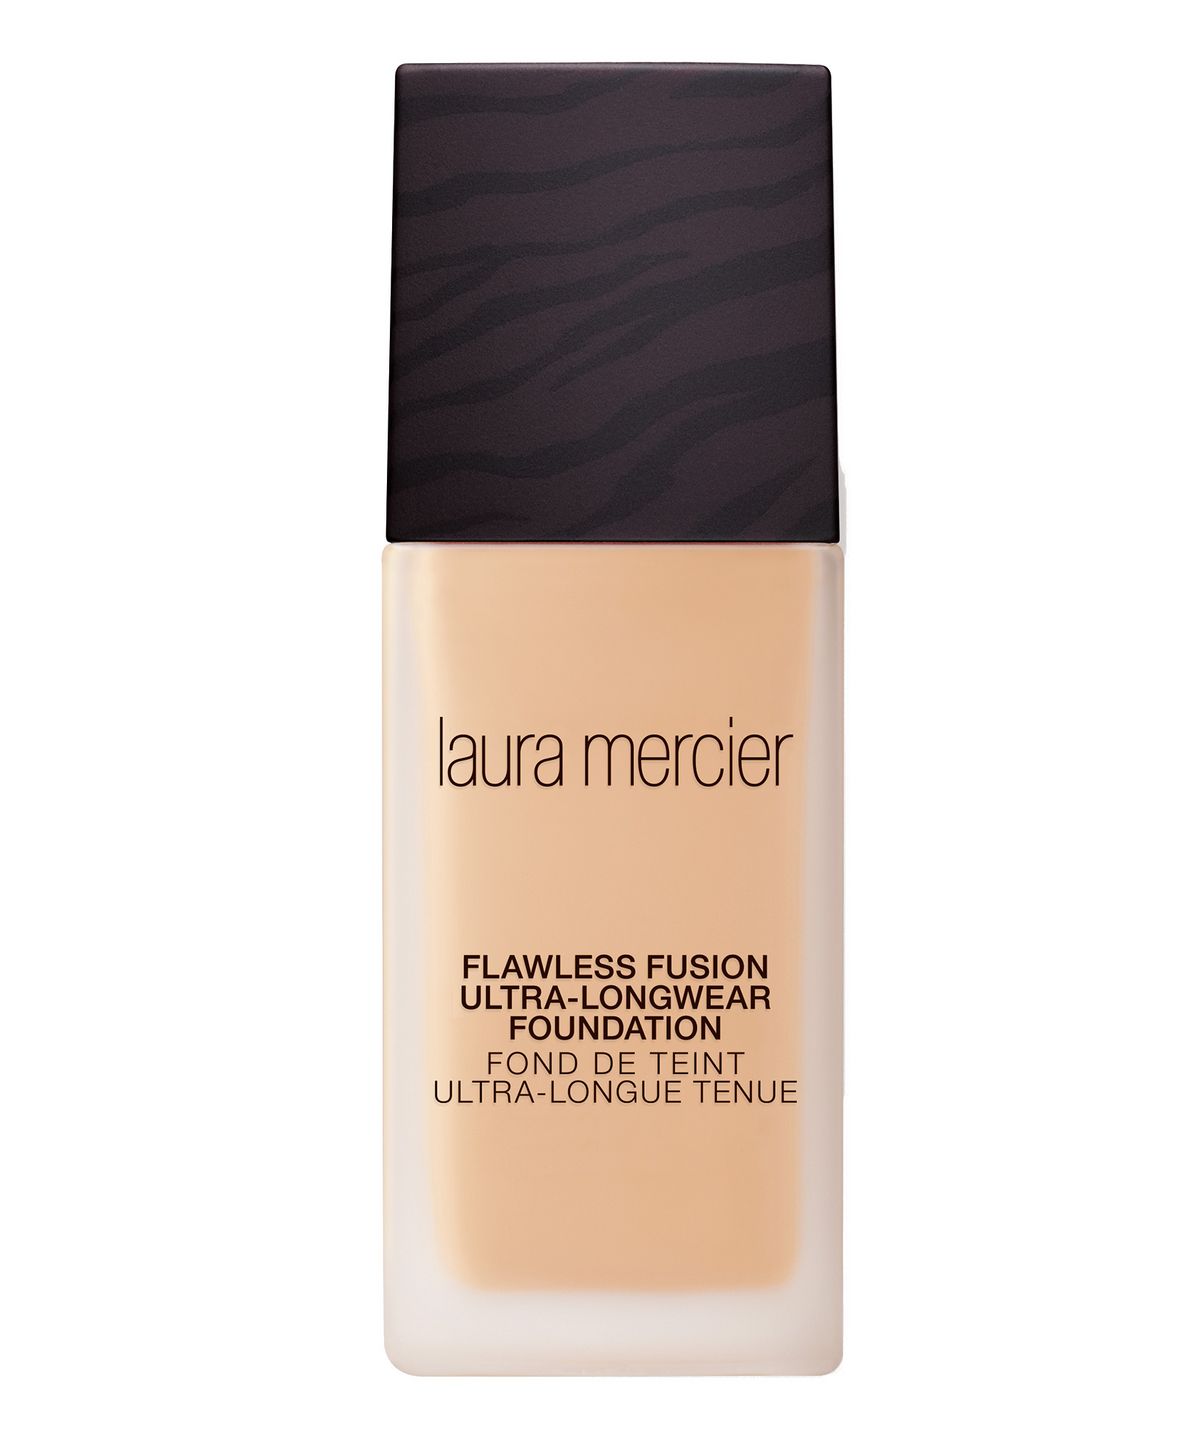 Laura Mercier - Flawless Fusion Ultra-Longwear Foundation - Shell